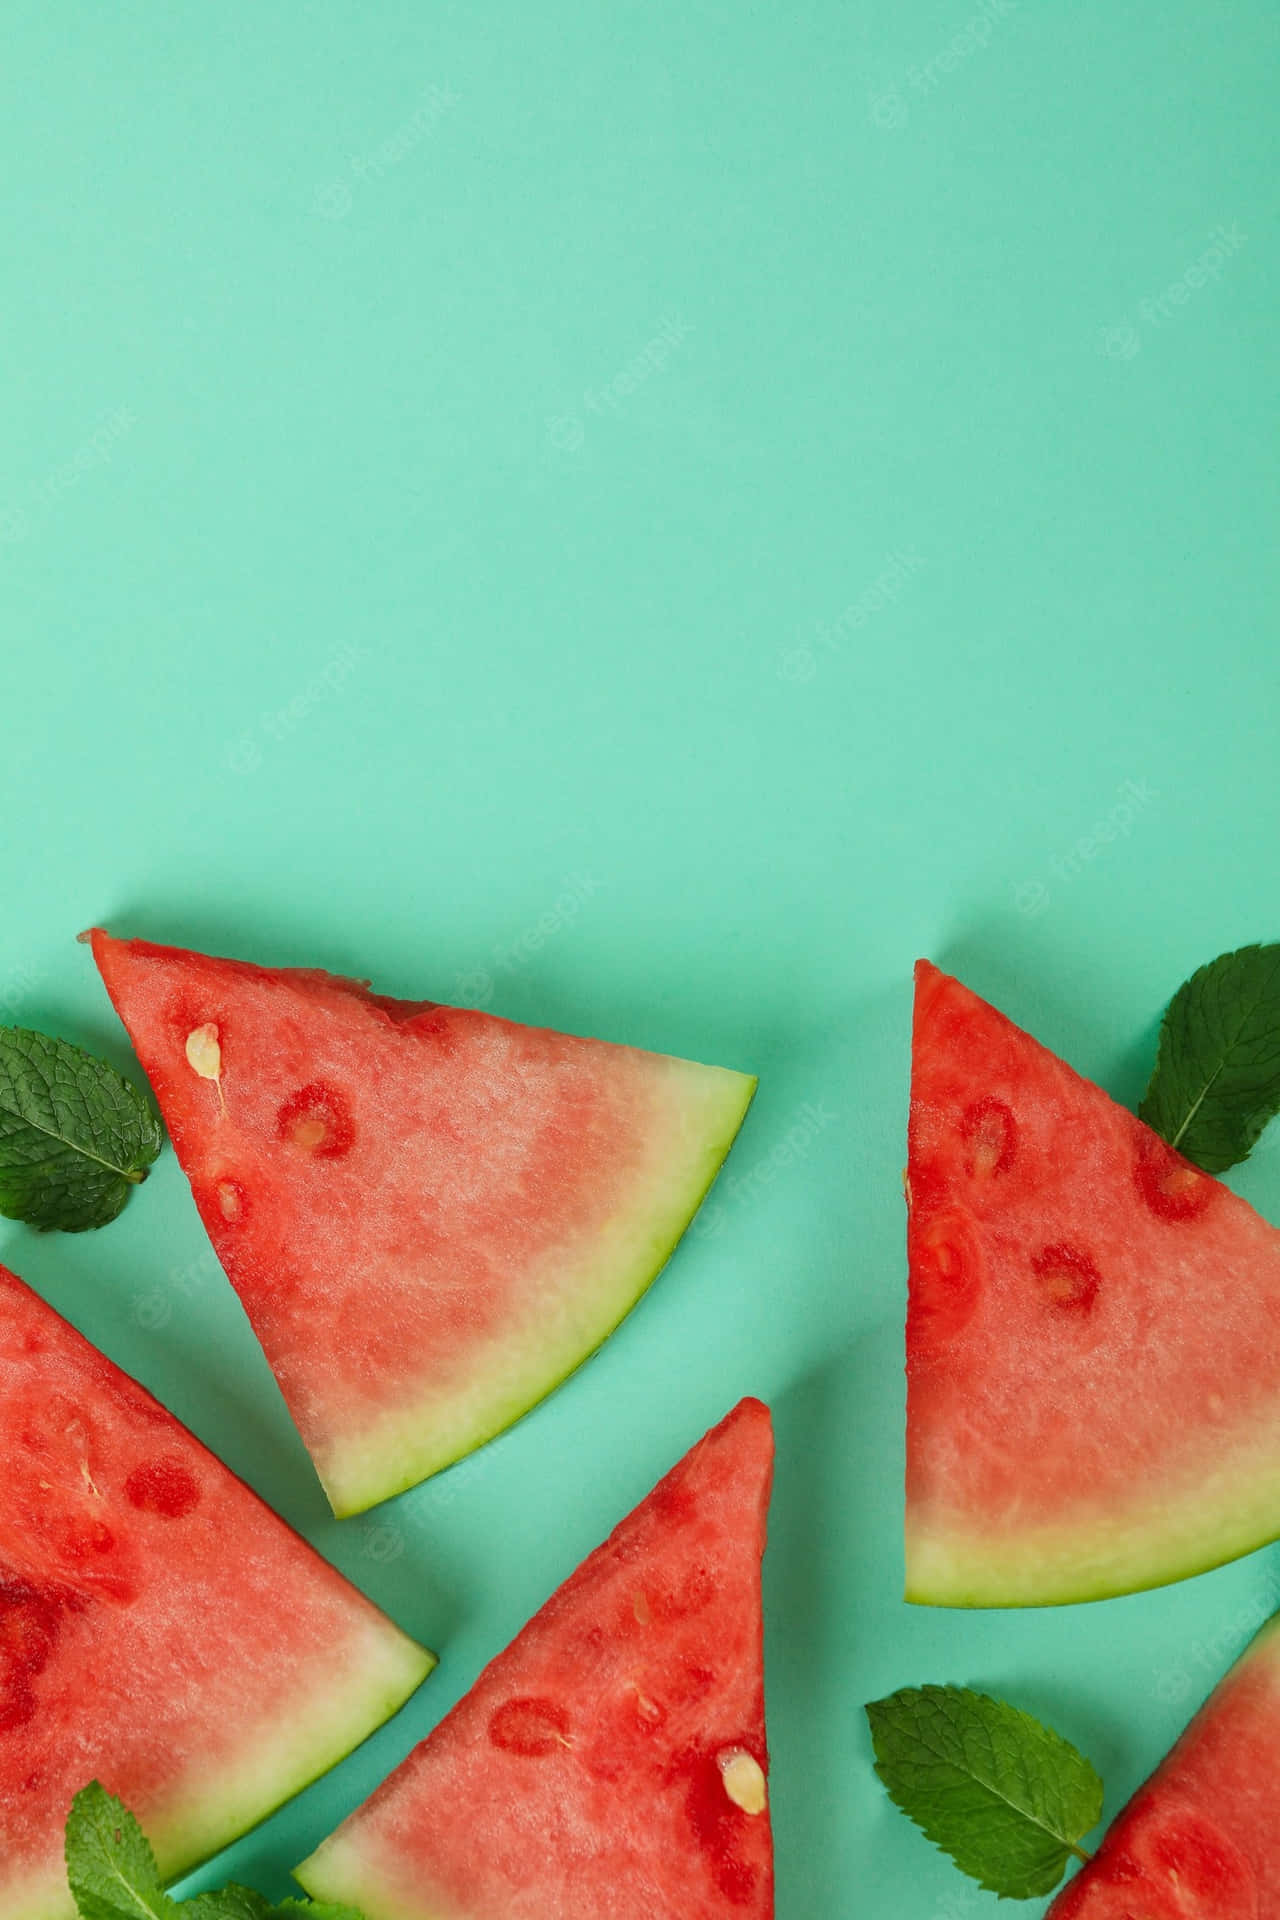 Free Watermelon Wallpaper for your phone  Watermelon Sugar Background   Summer Wallpaper  iPhone wallpaper